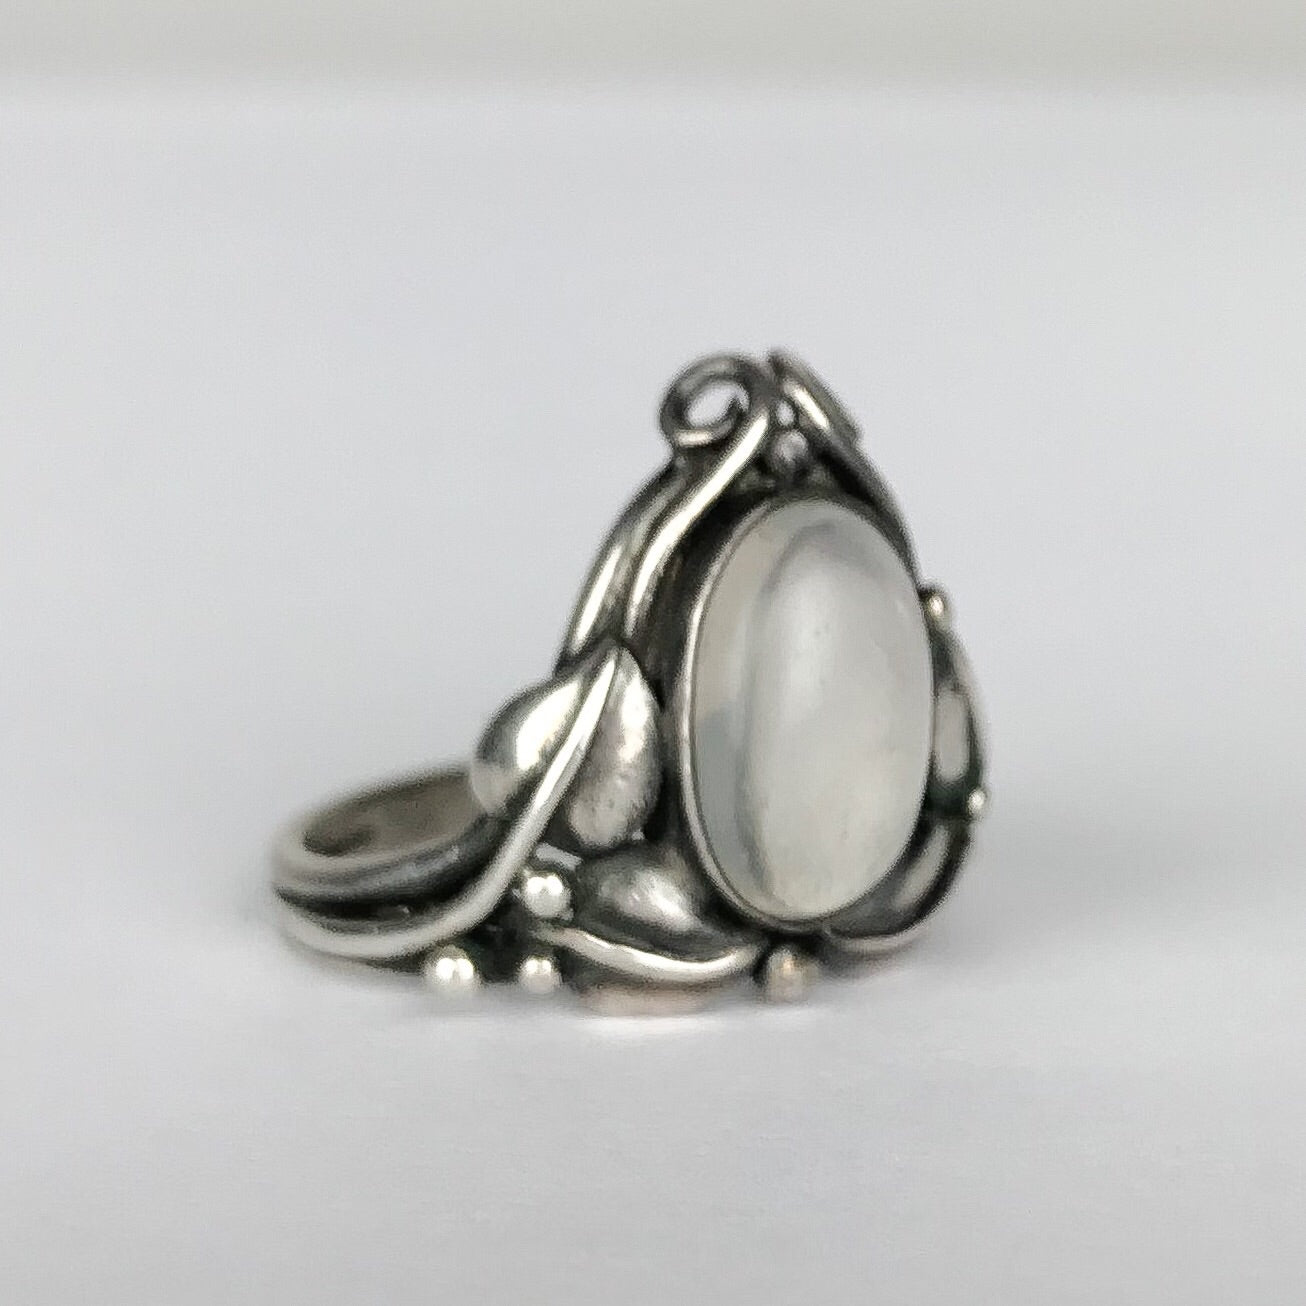 SOLD--Art Nouveau Moonstone Tiara Ring Sterling c. 1900